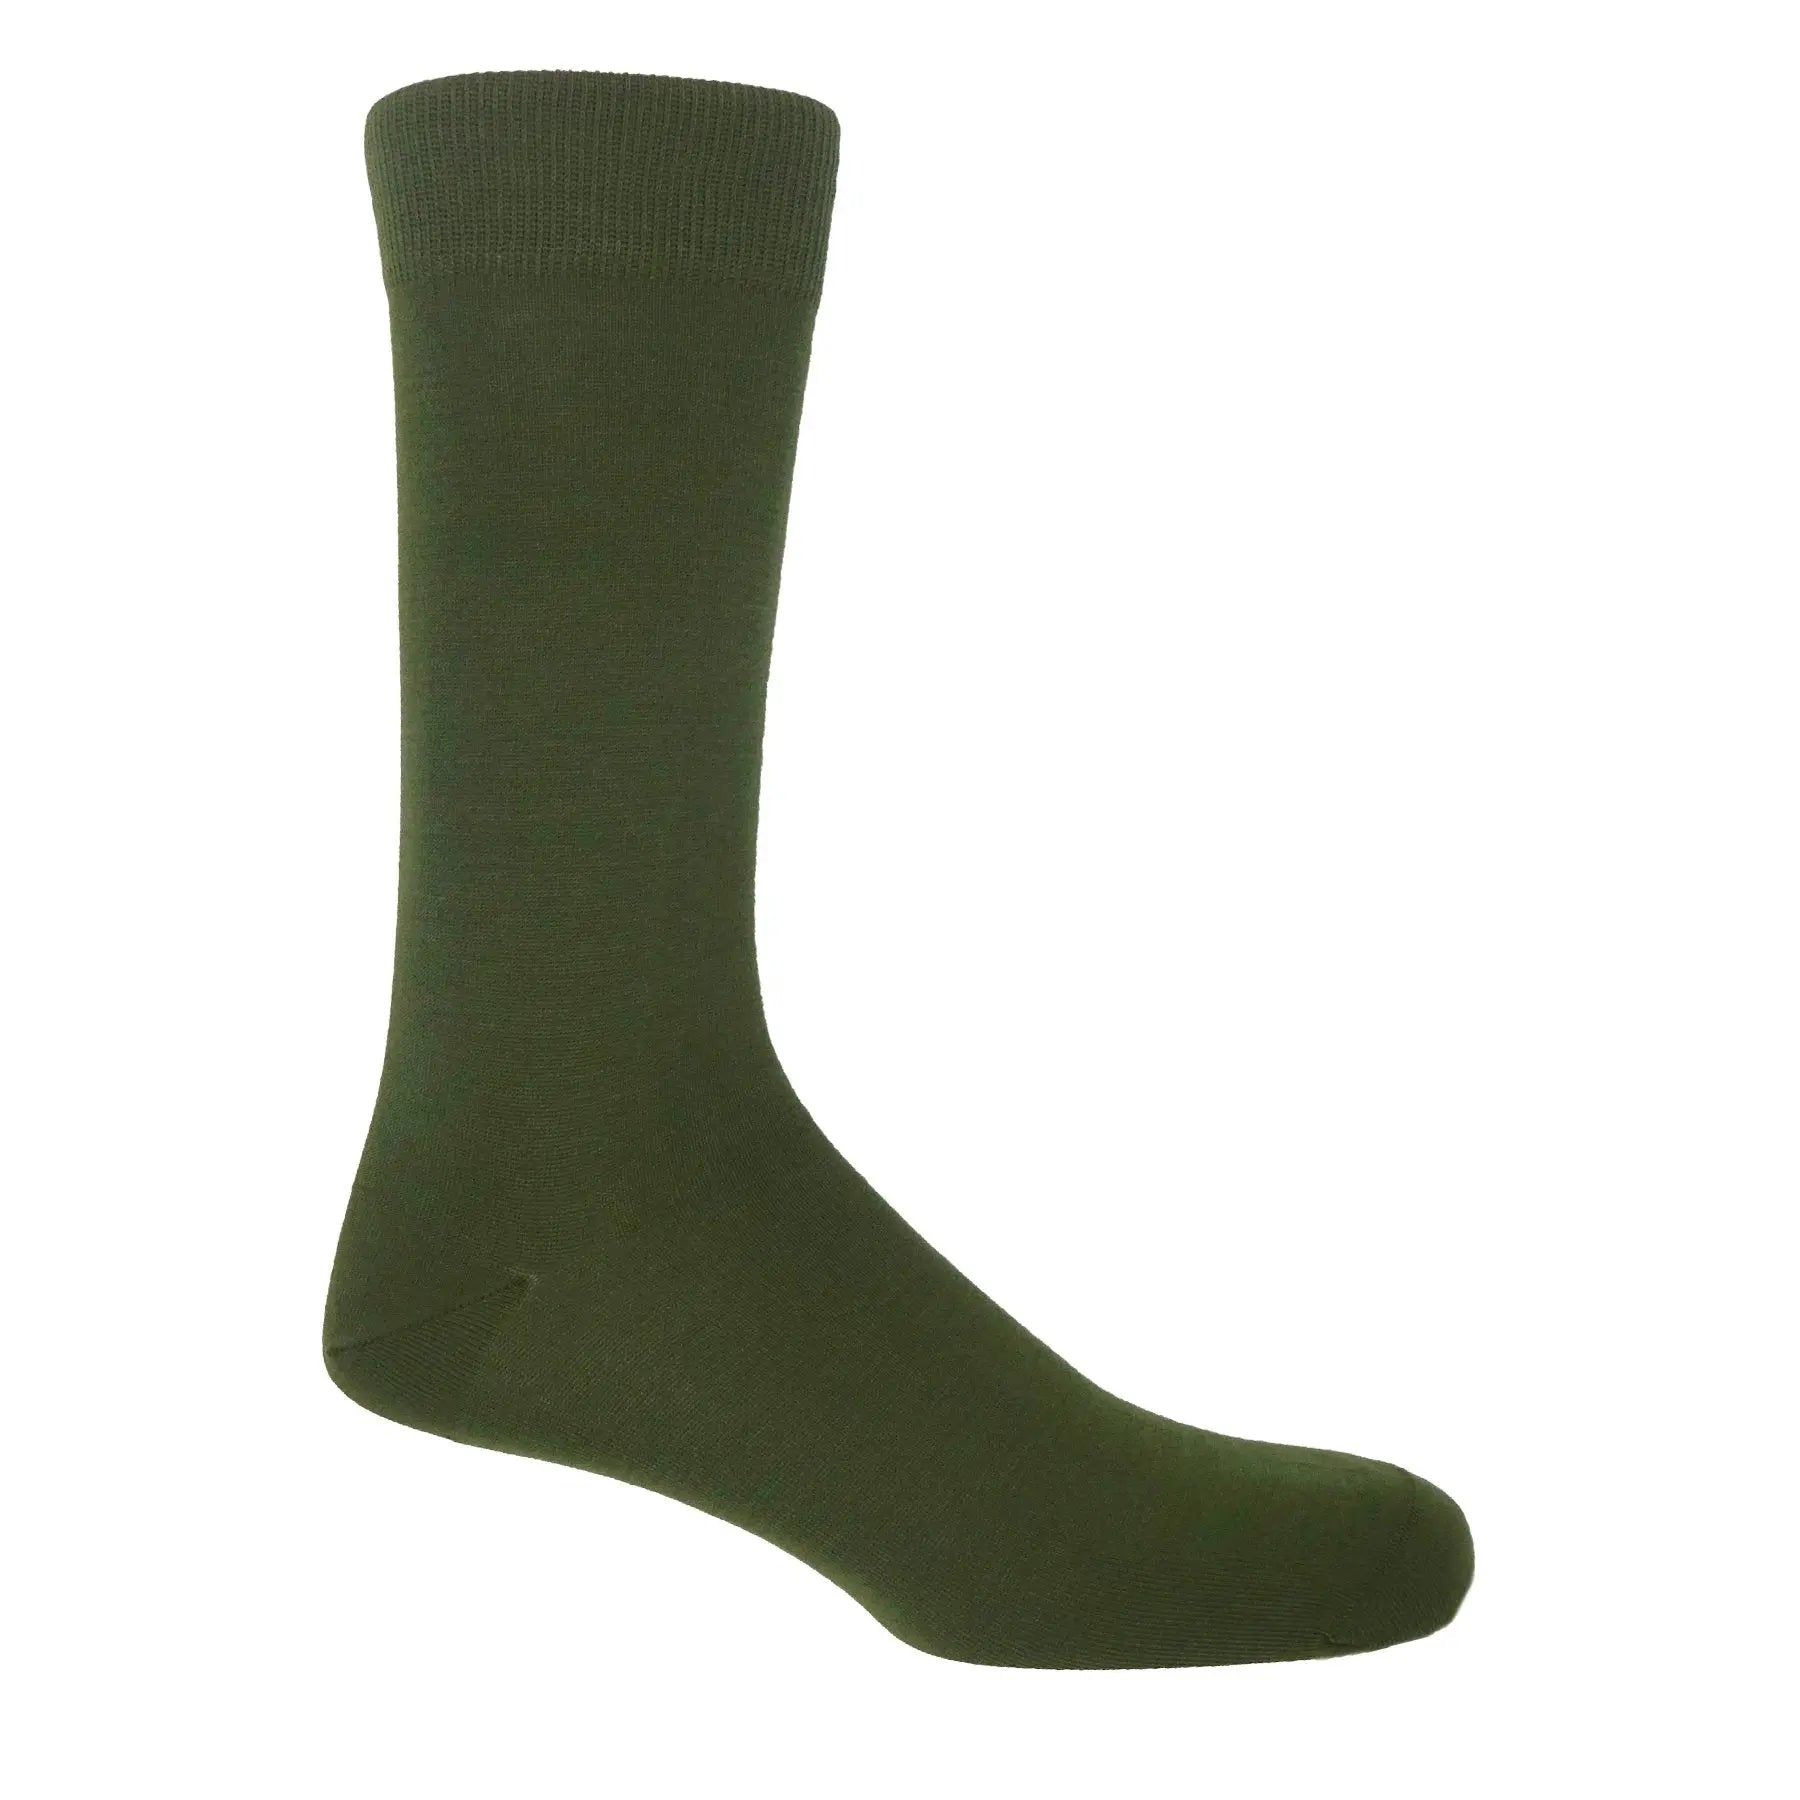 Buy Peper Harow Pine Classic Socks | Sockss at Woven Durham